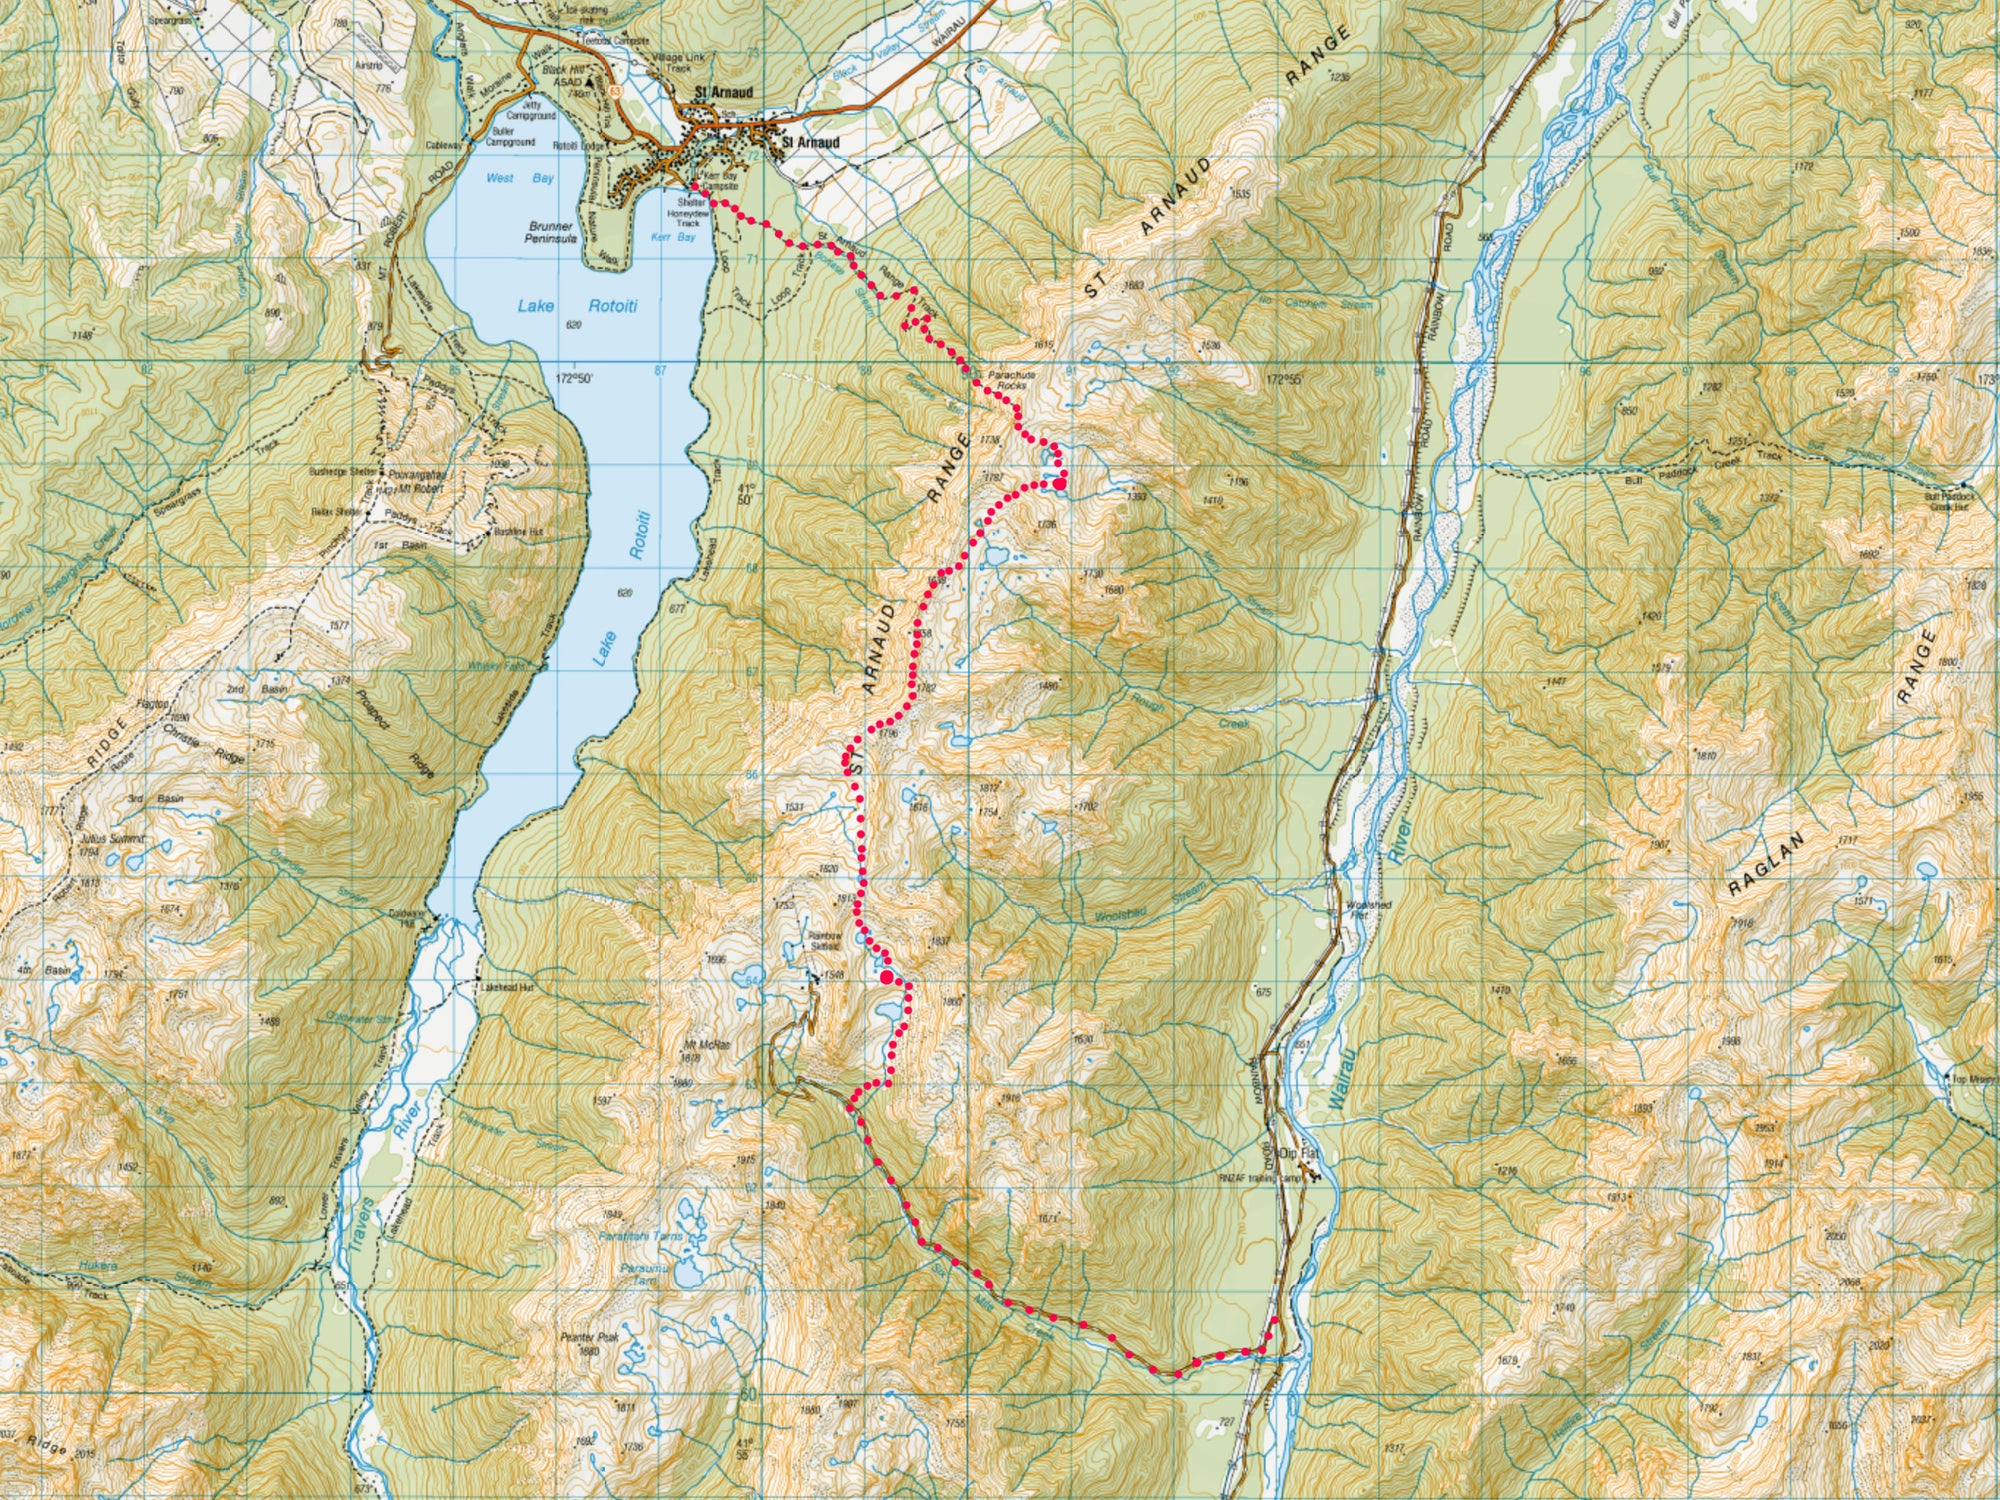 The ridge route